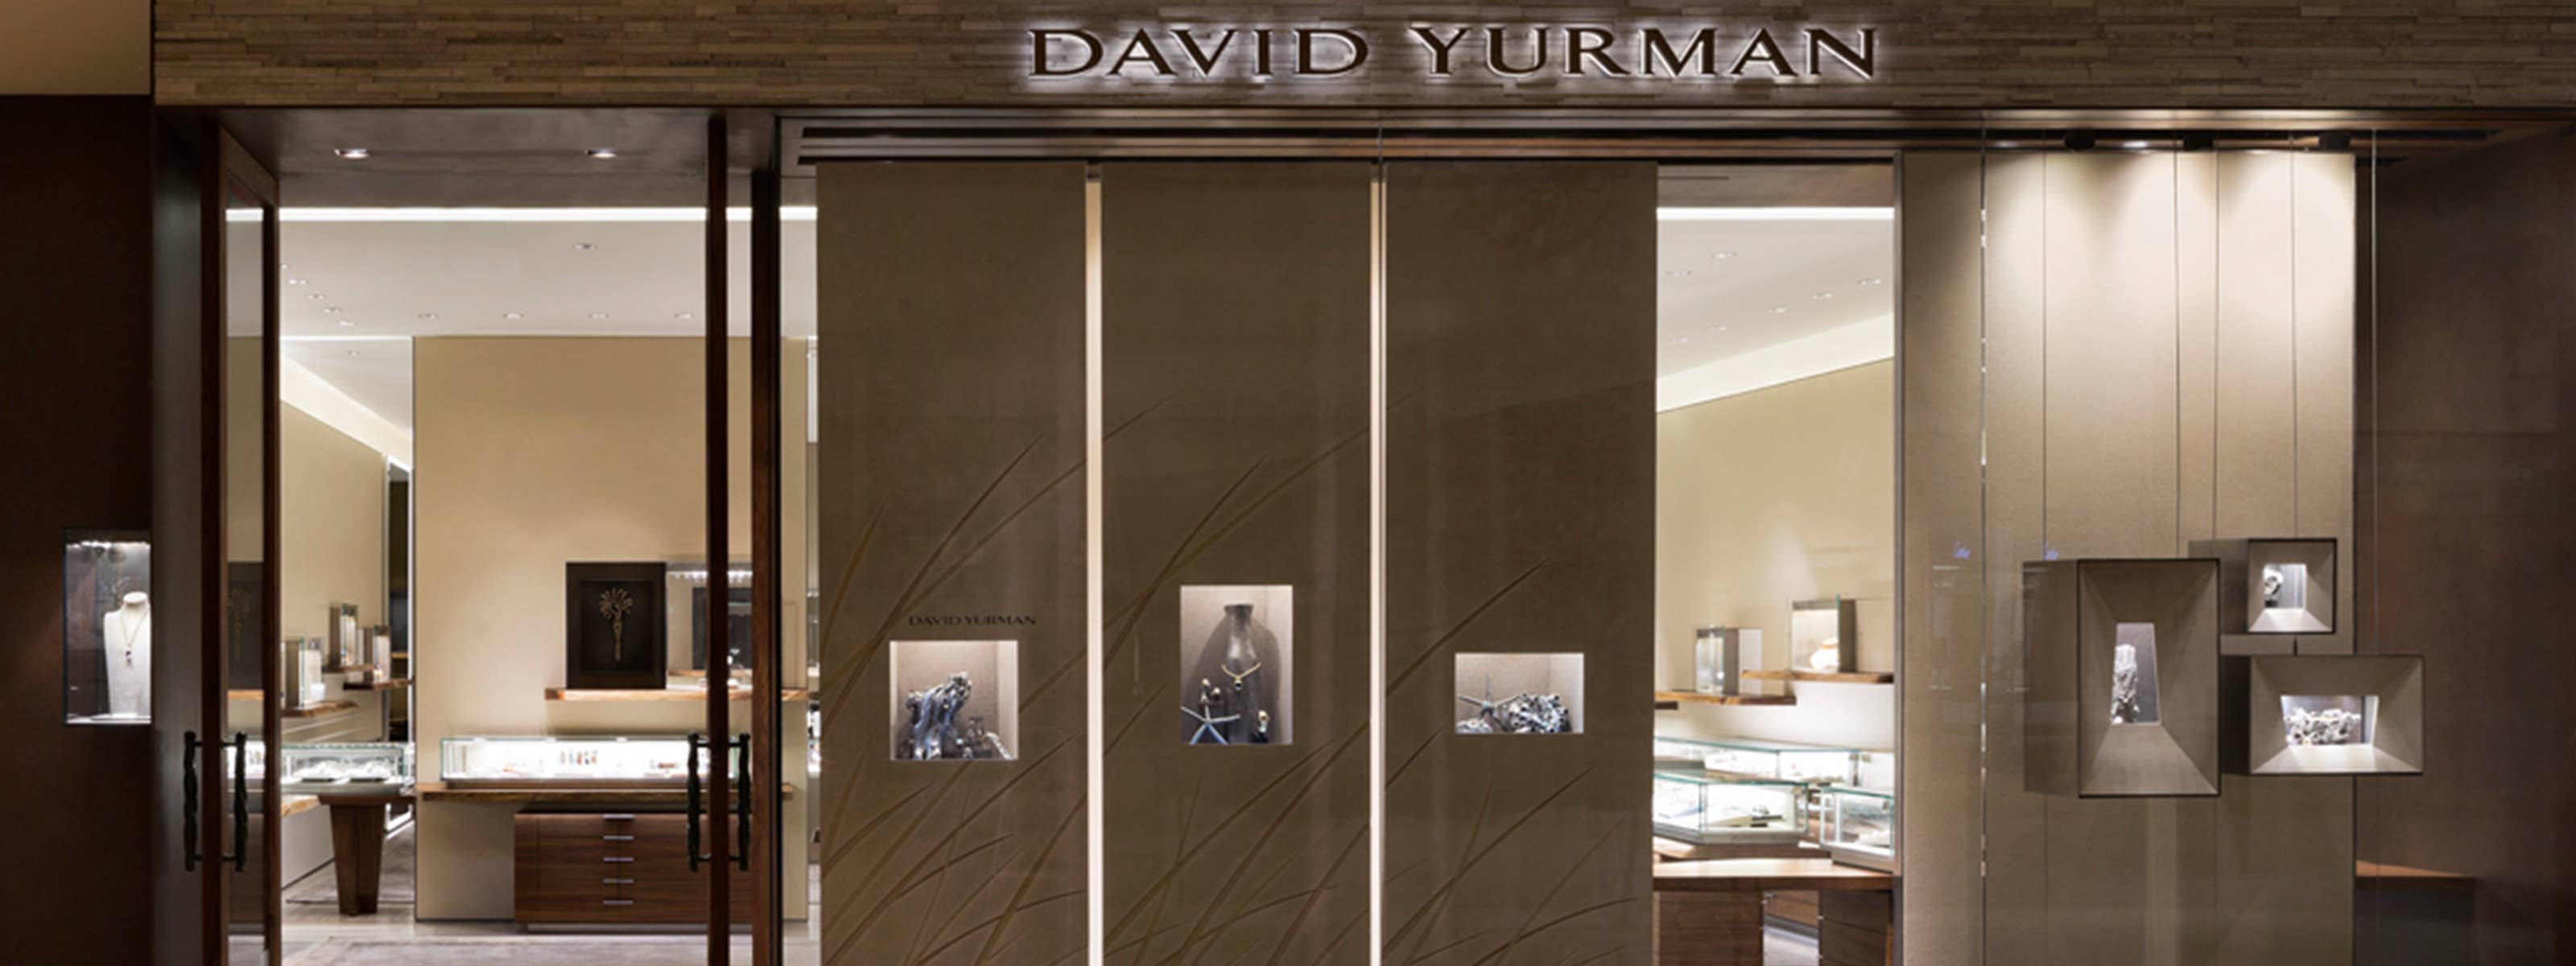 David Yurman - South Coast Plaza